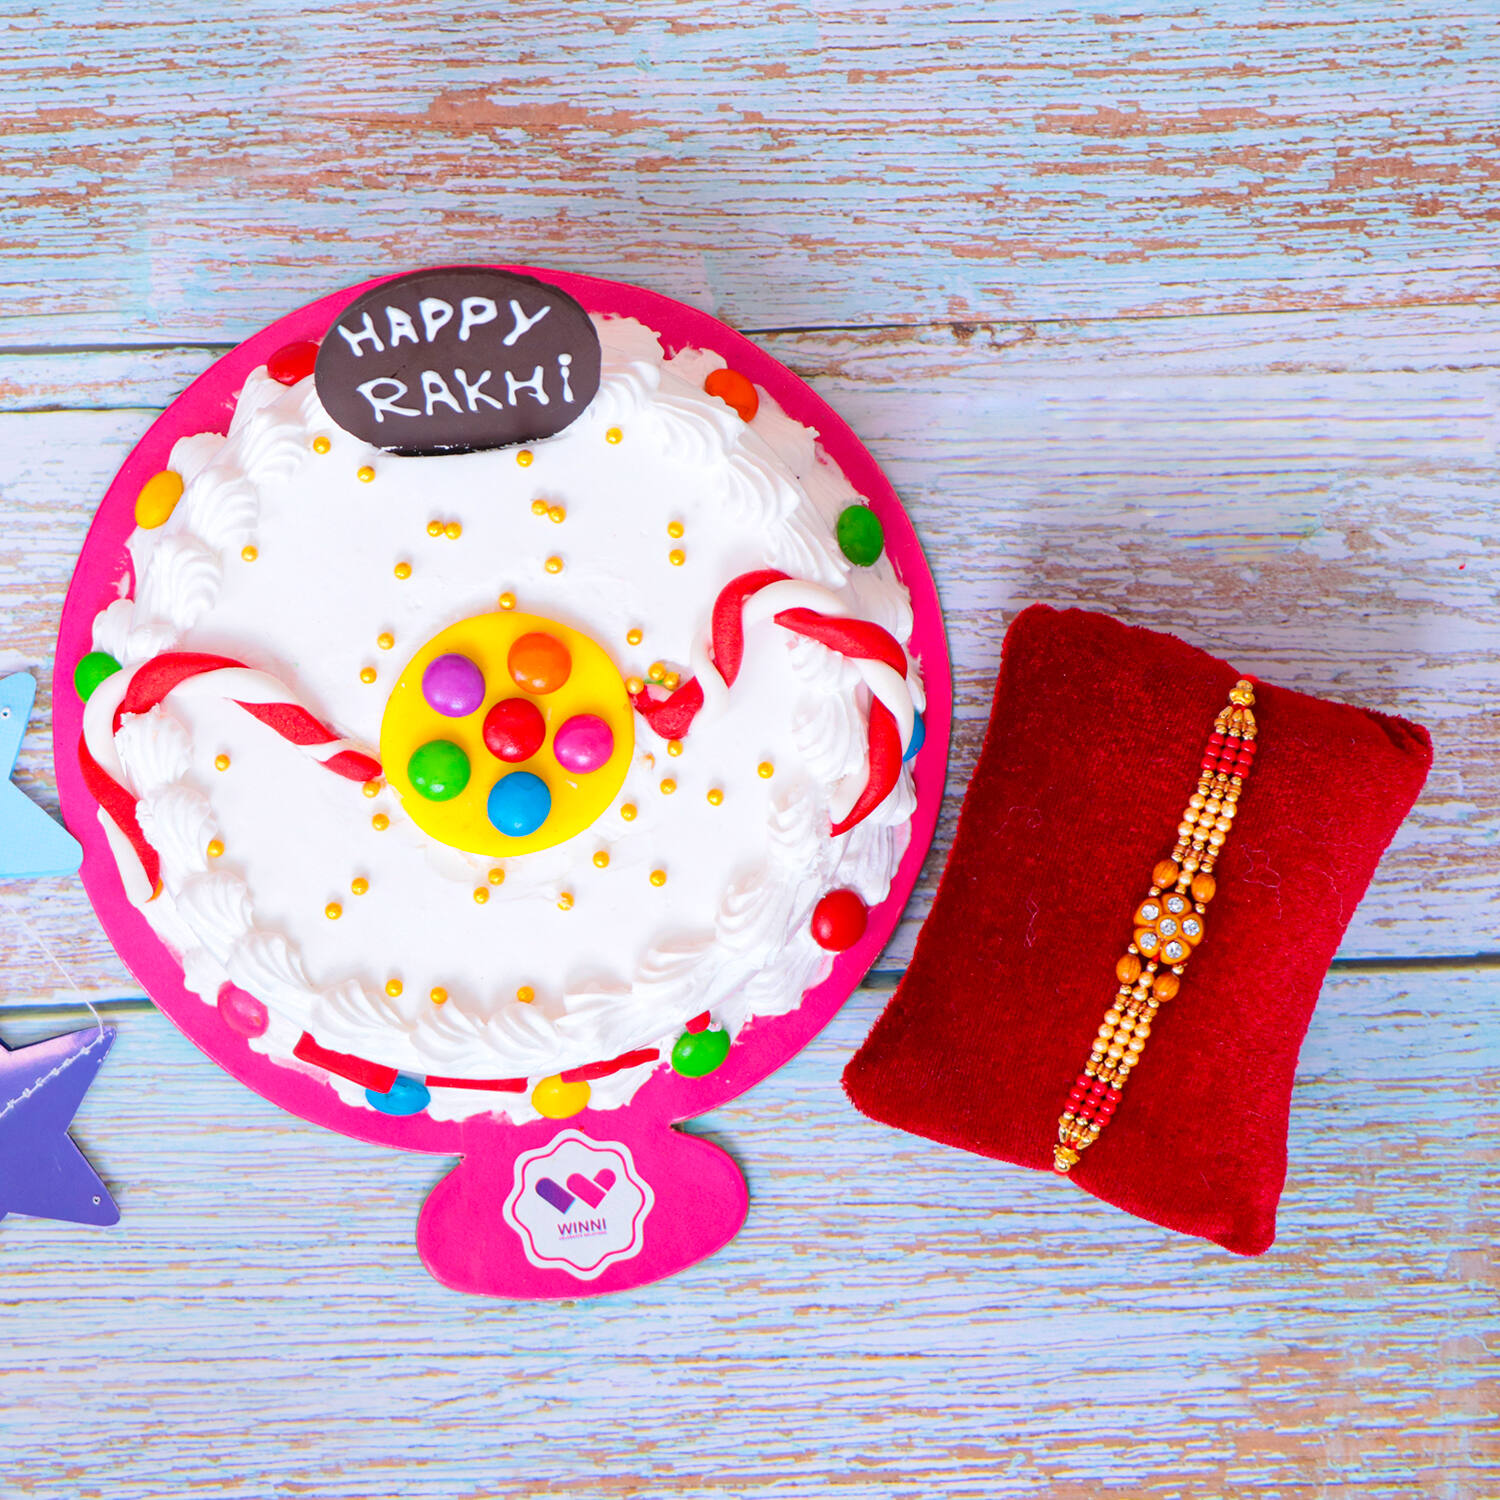 Rakhi Theme Cake | Order for Brother - Sister on Raksha Bandhan | Gurugram